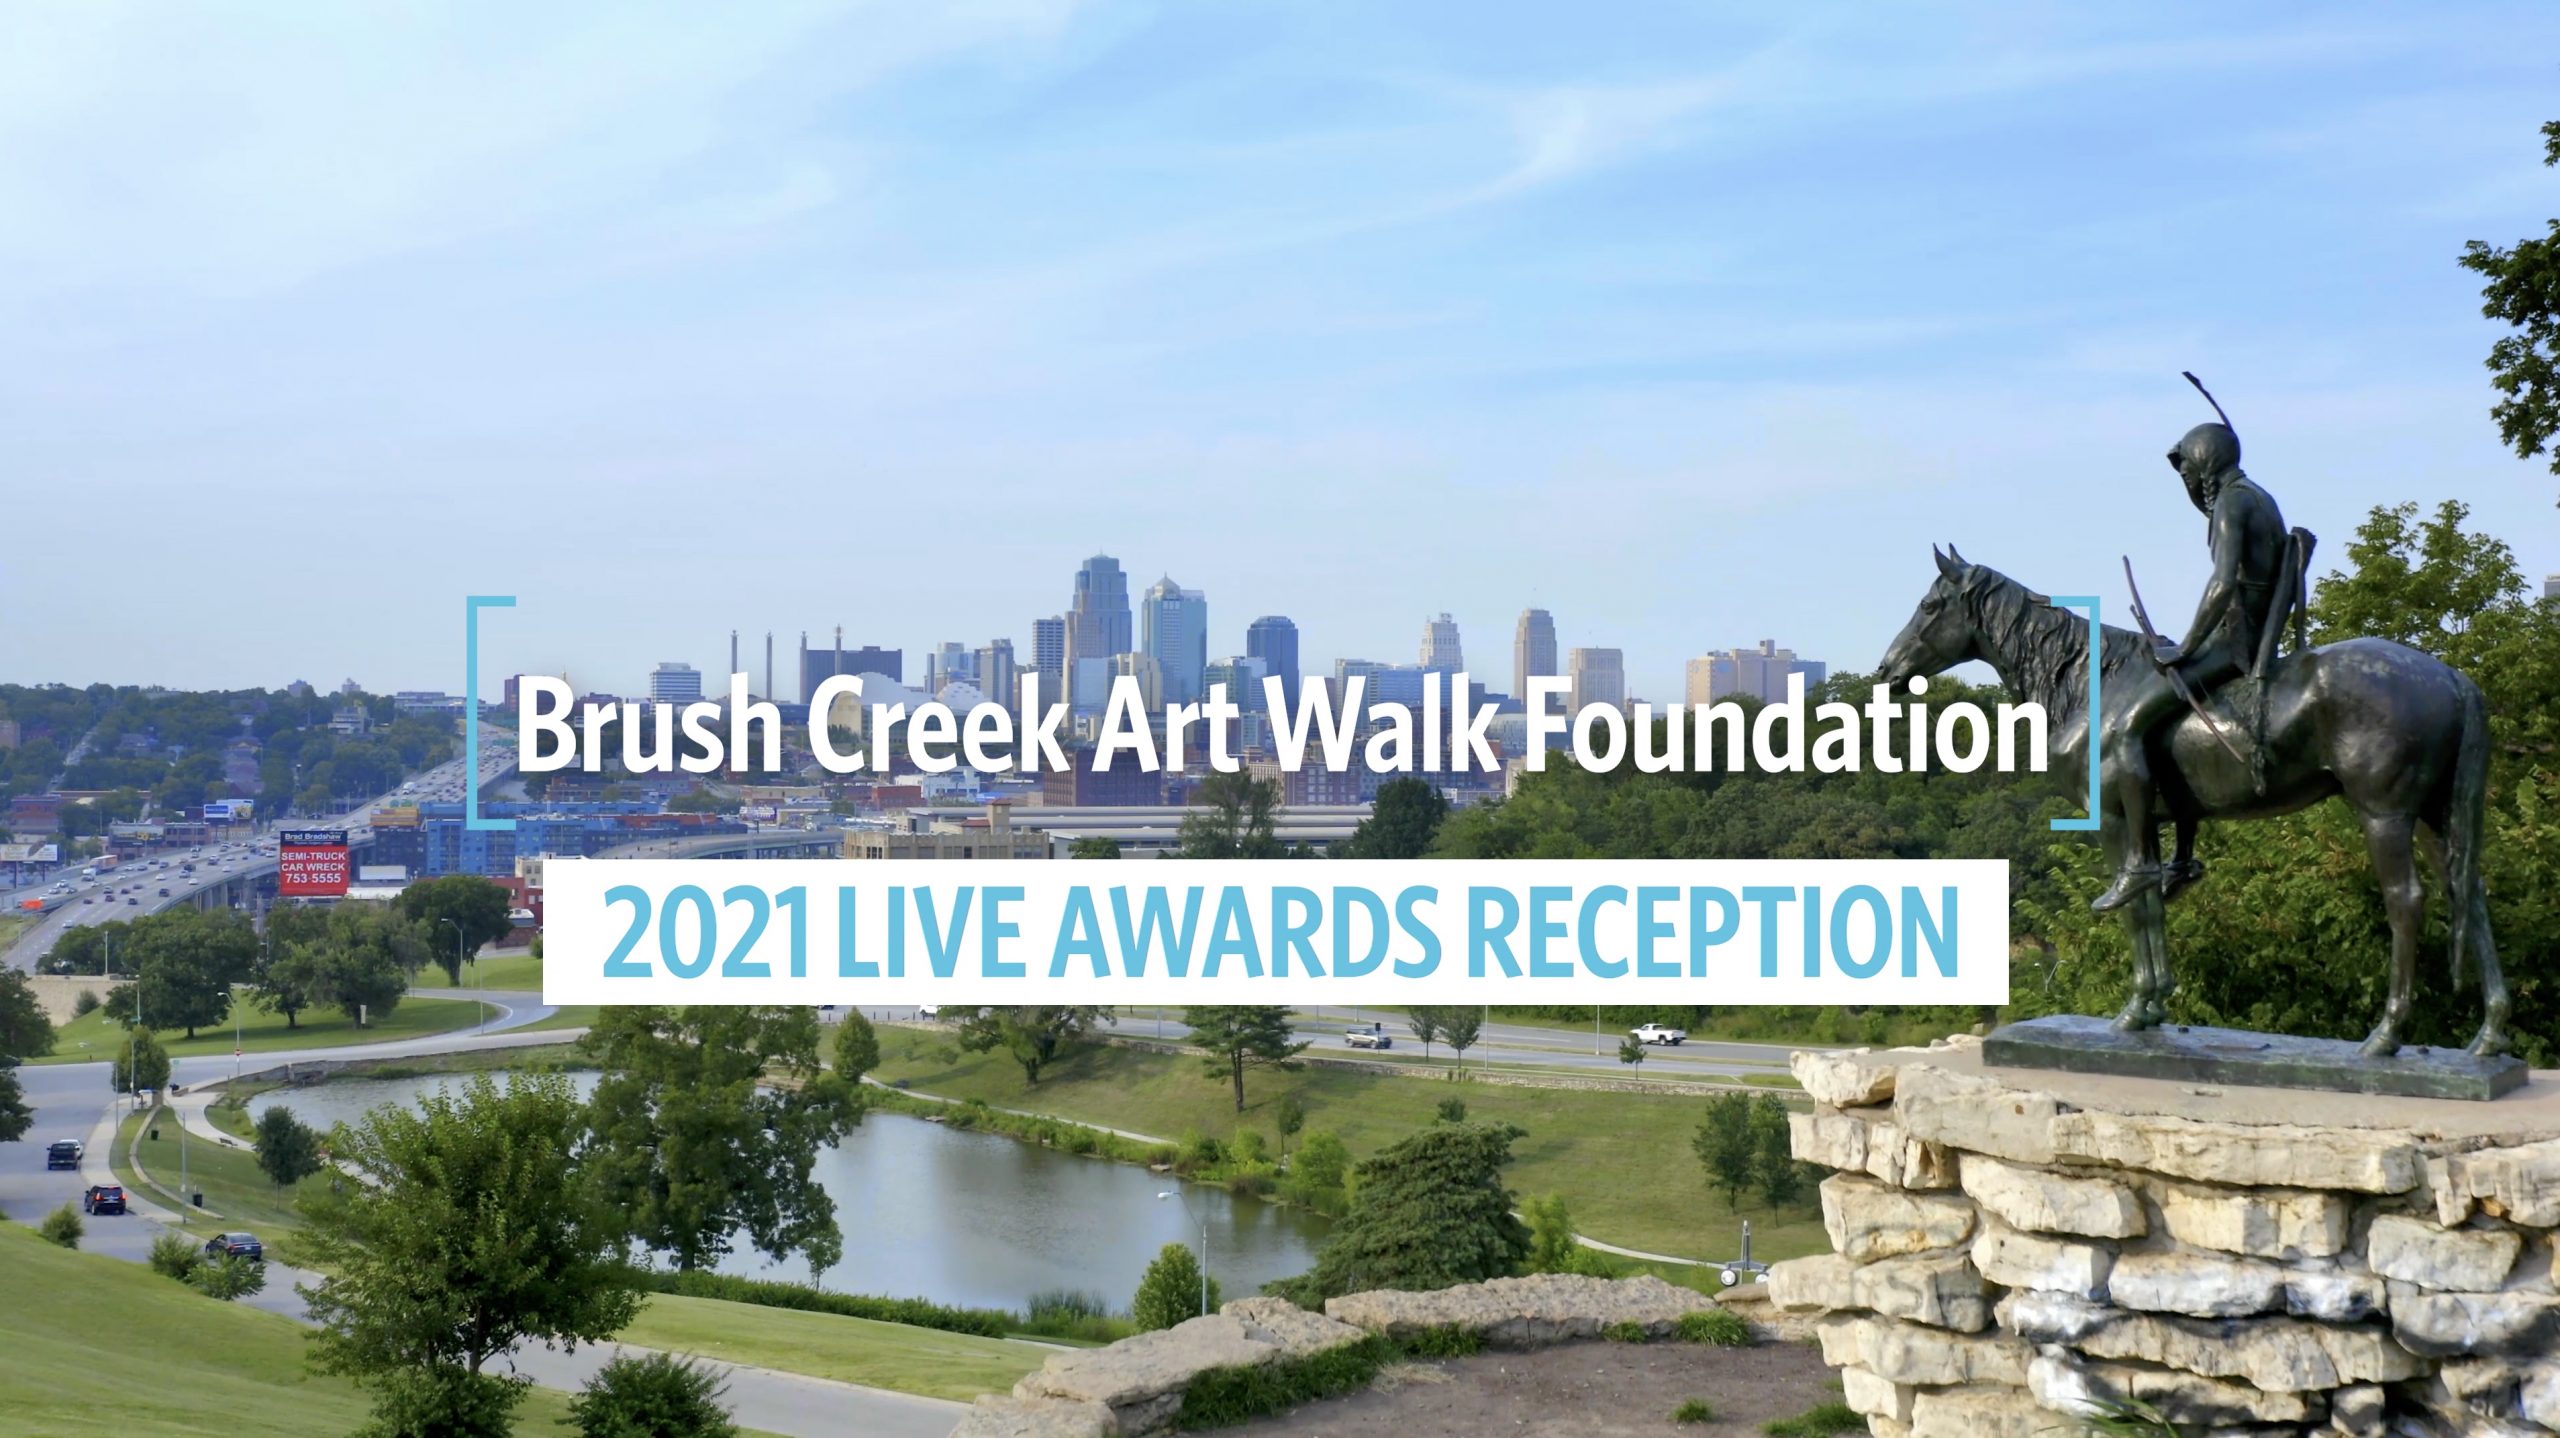 Brush Creek Art Walk Foundation 2021 Live awards